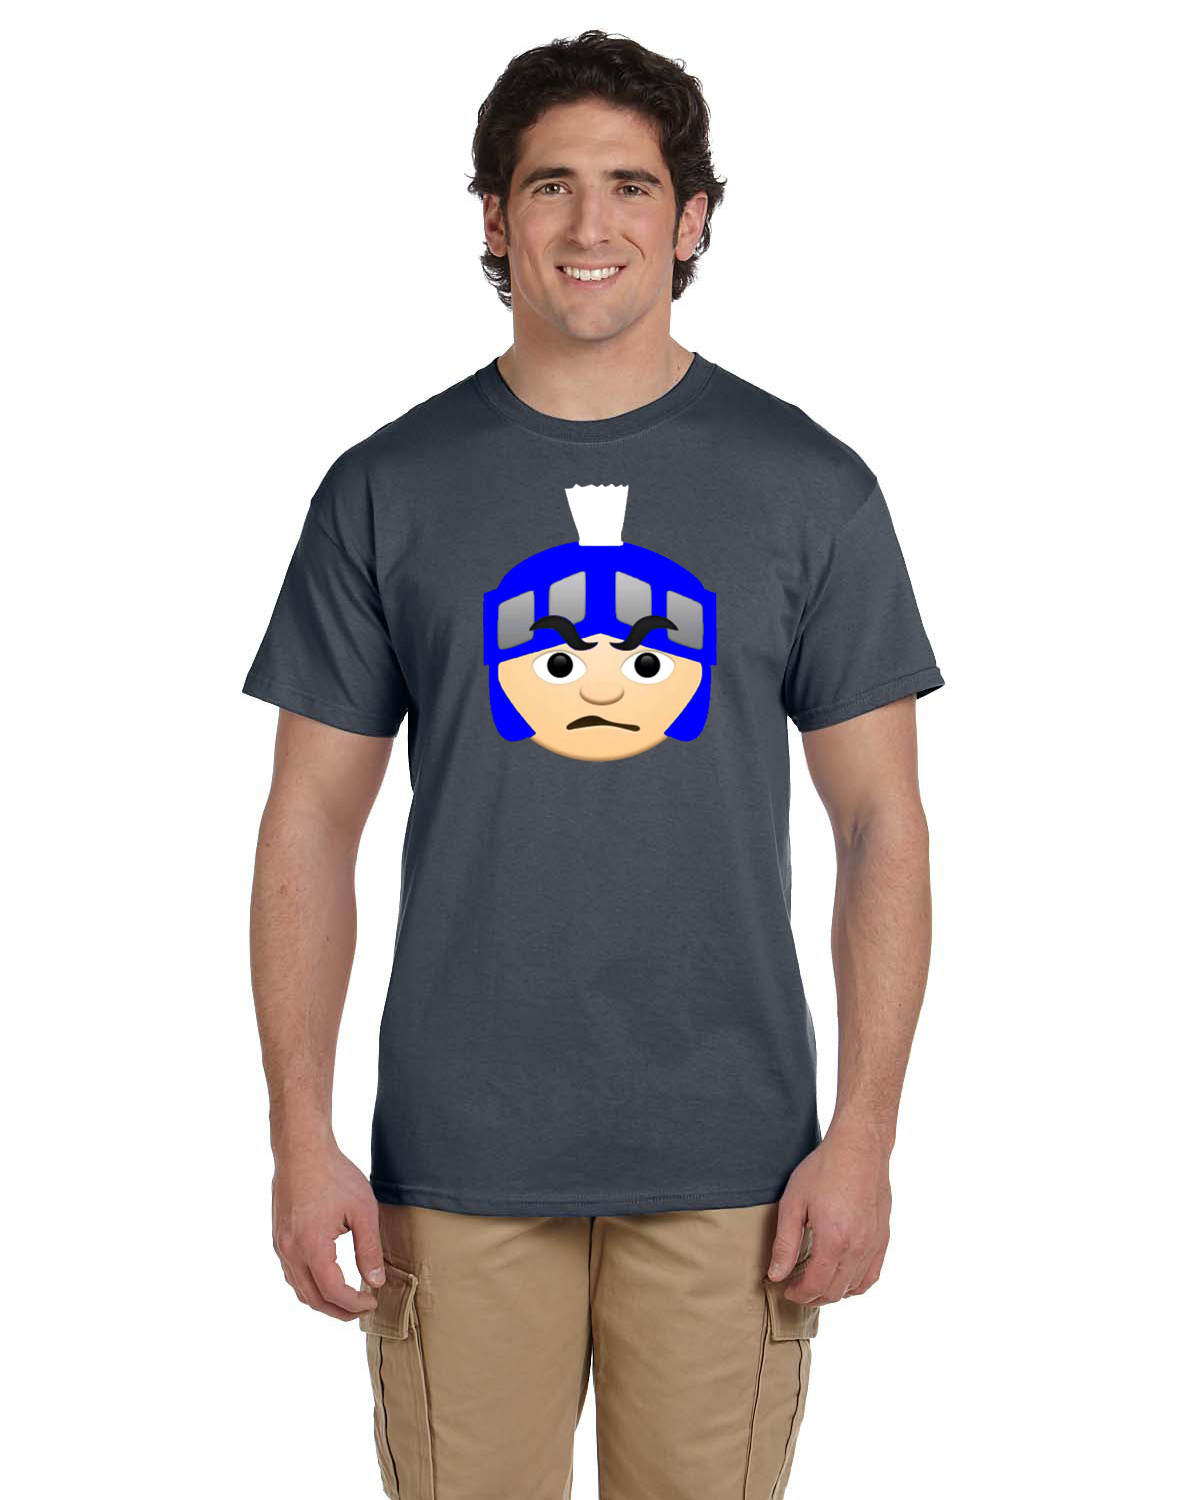 G200 - Spartan Emoji Shirt